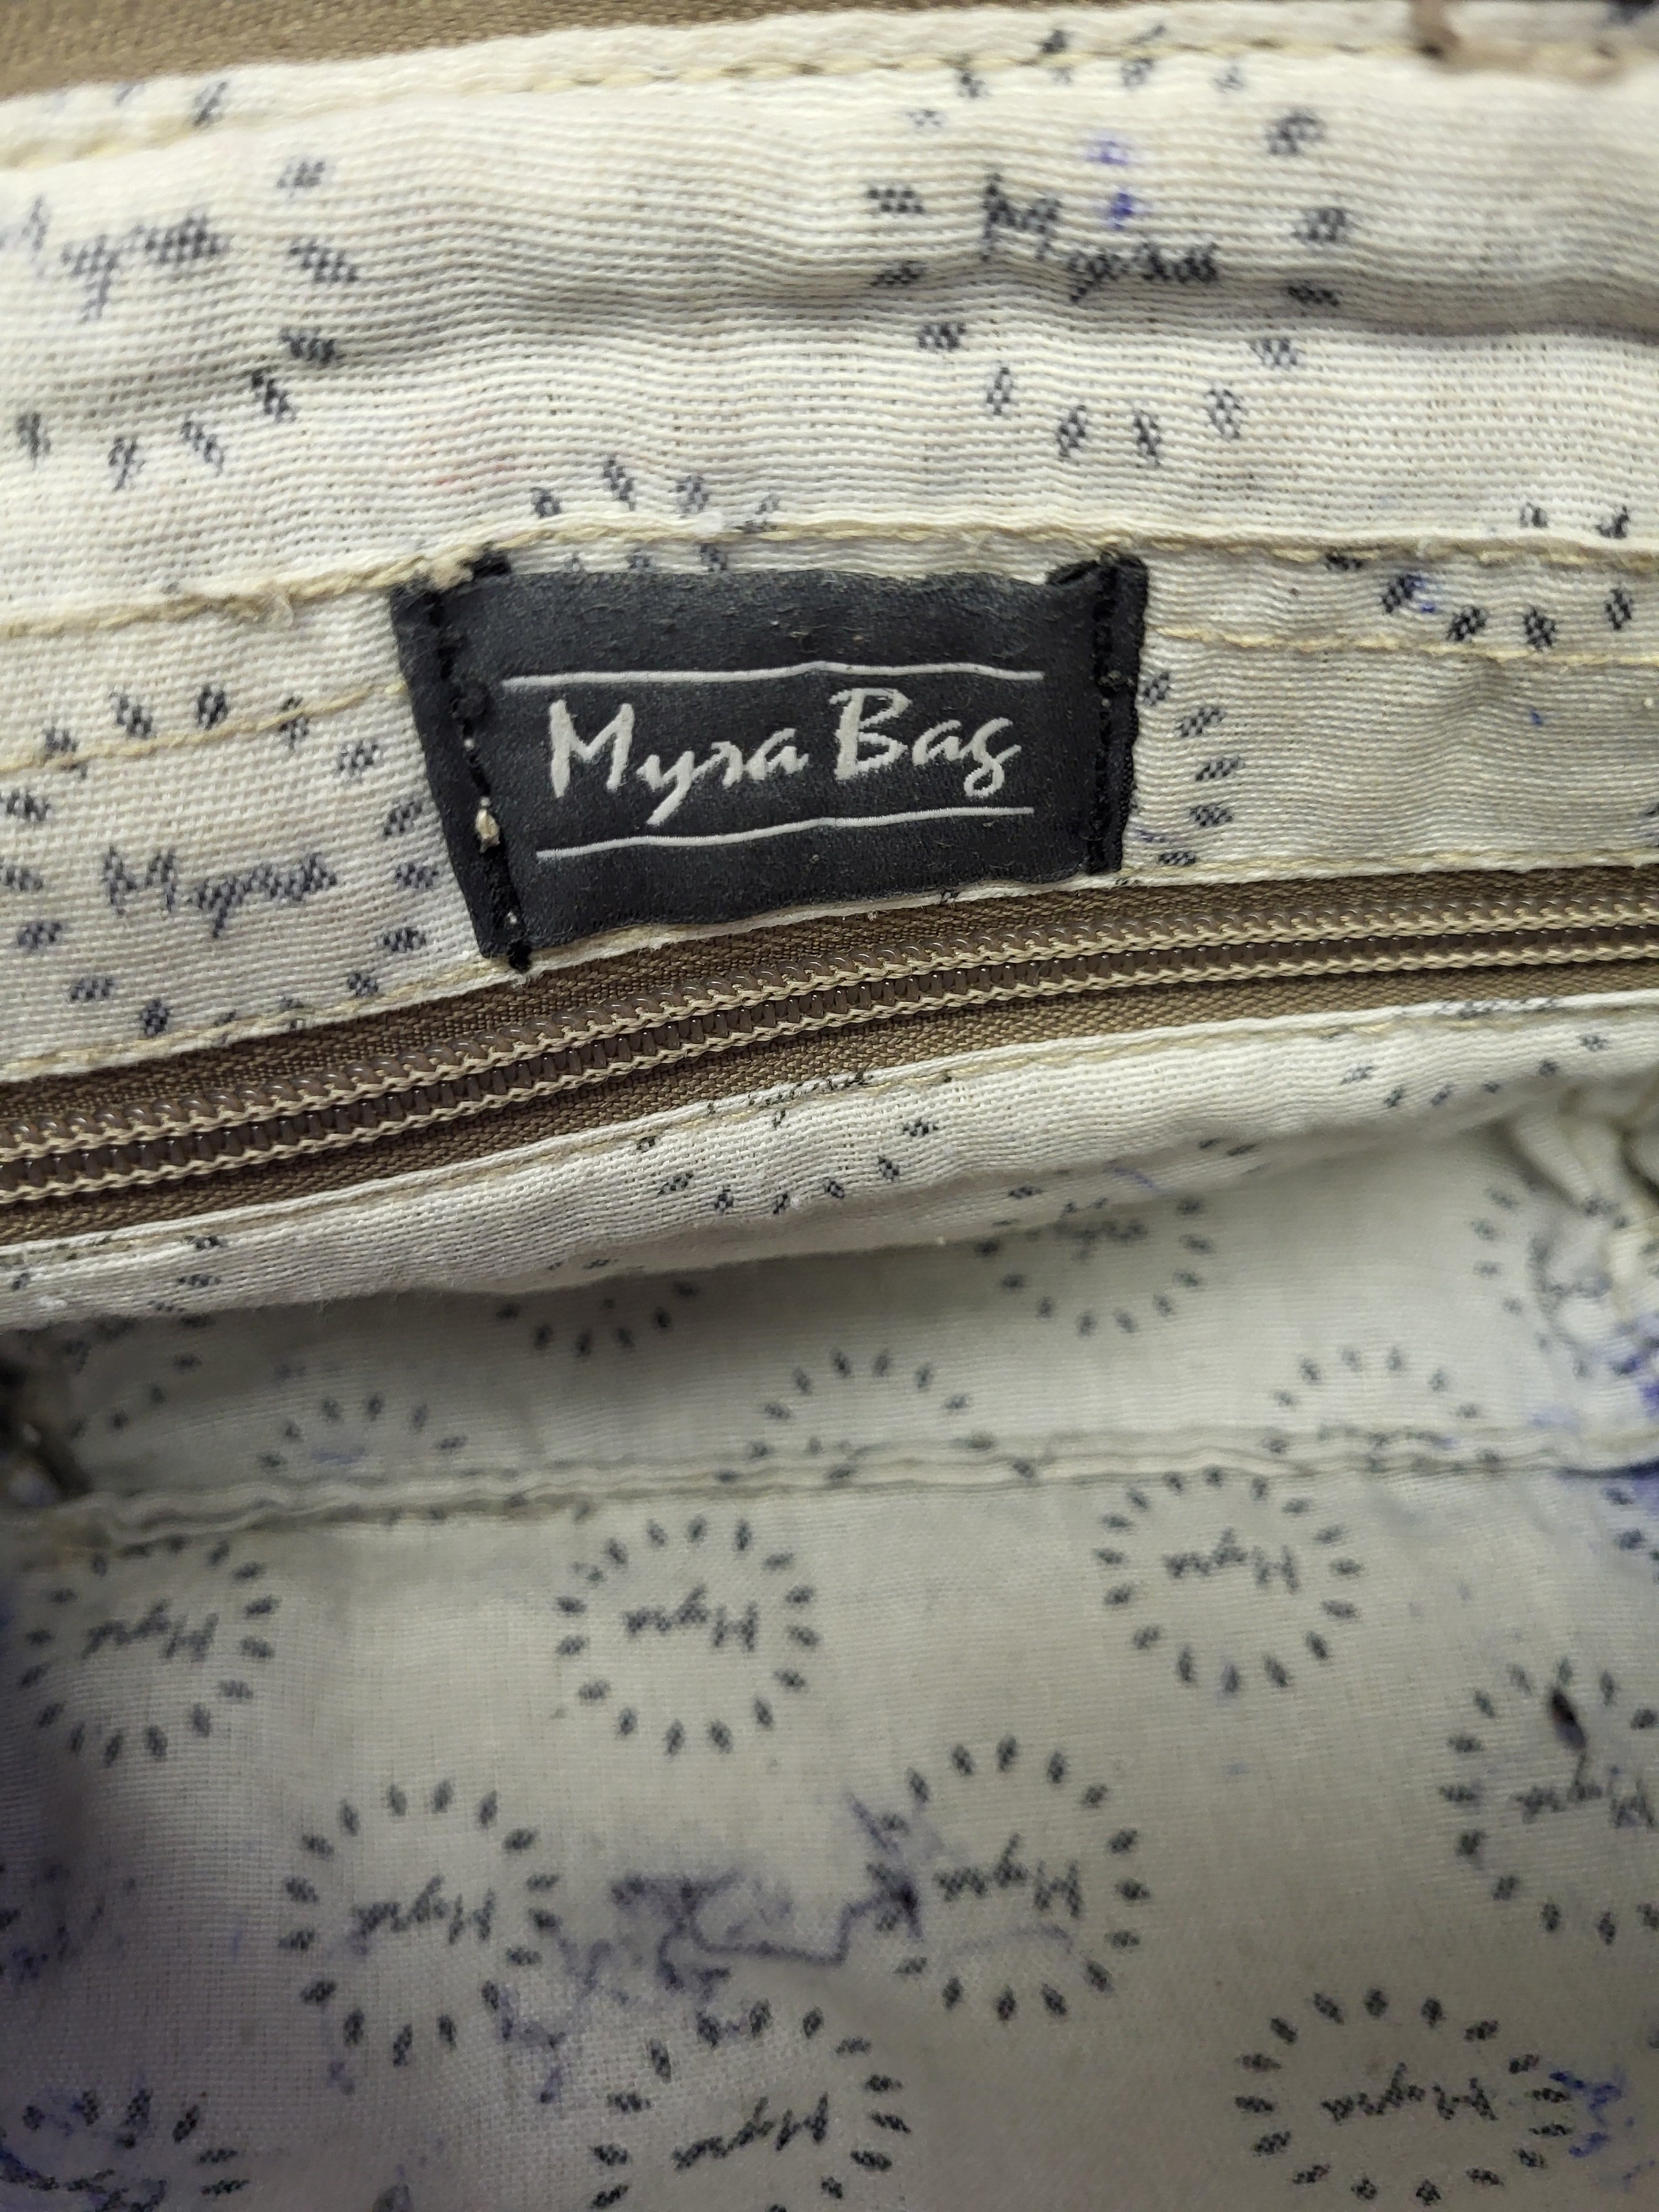 Myra Bag, Cow Hide, Cotton and Canvas Shoulder/Crossbody Bag